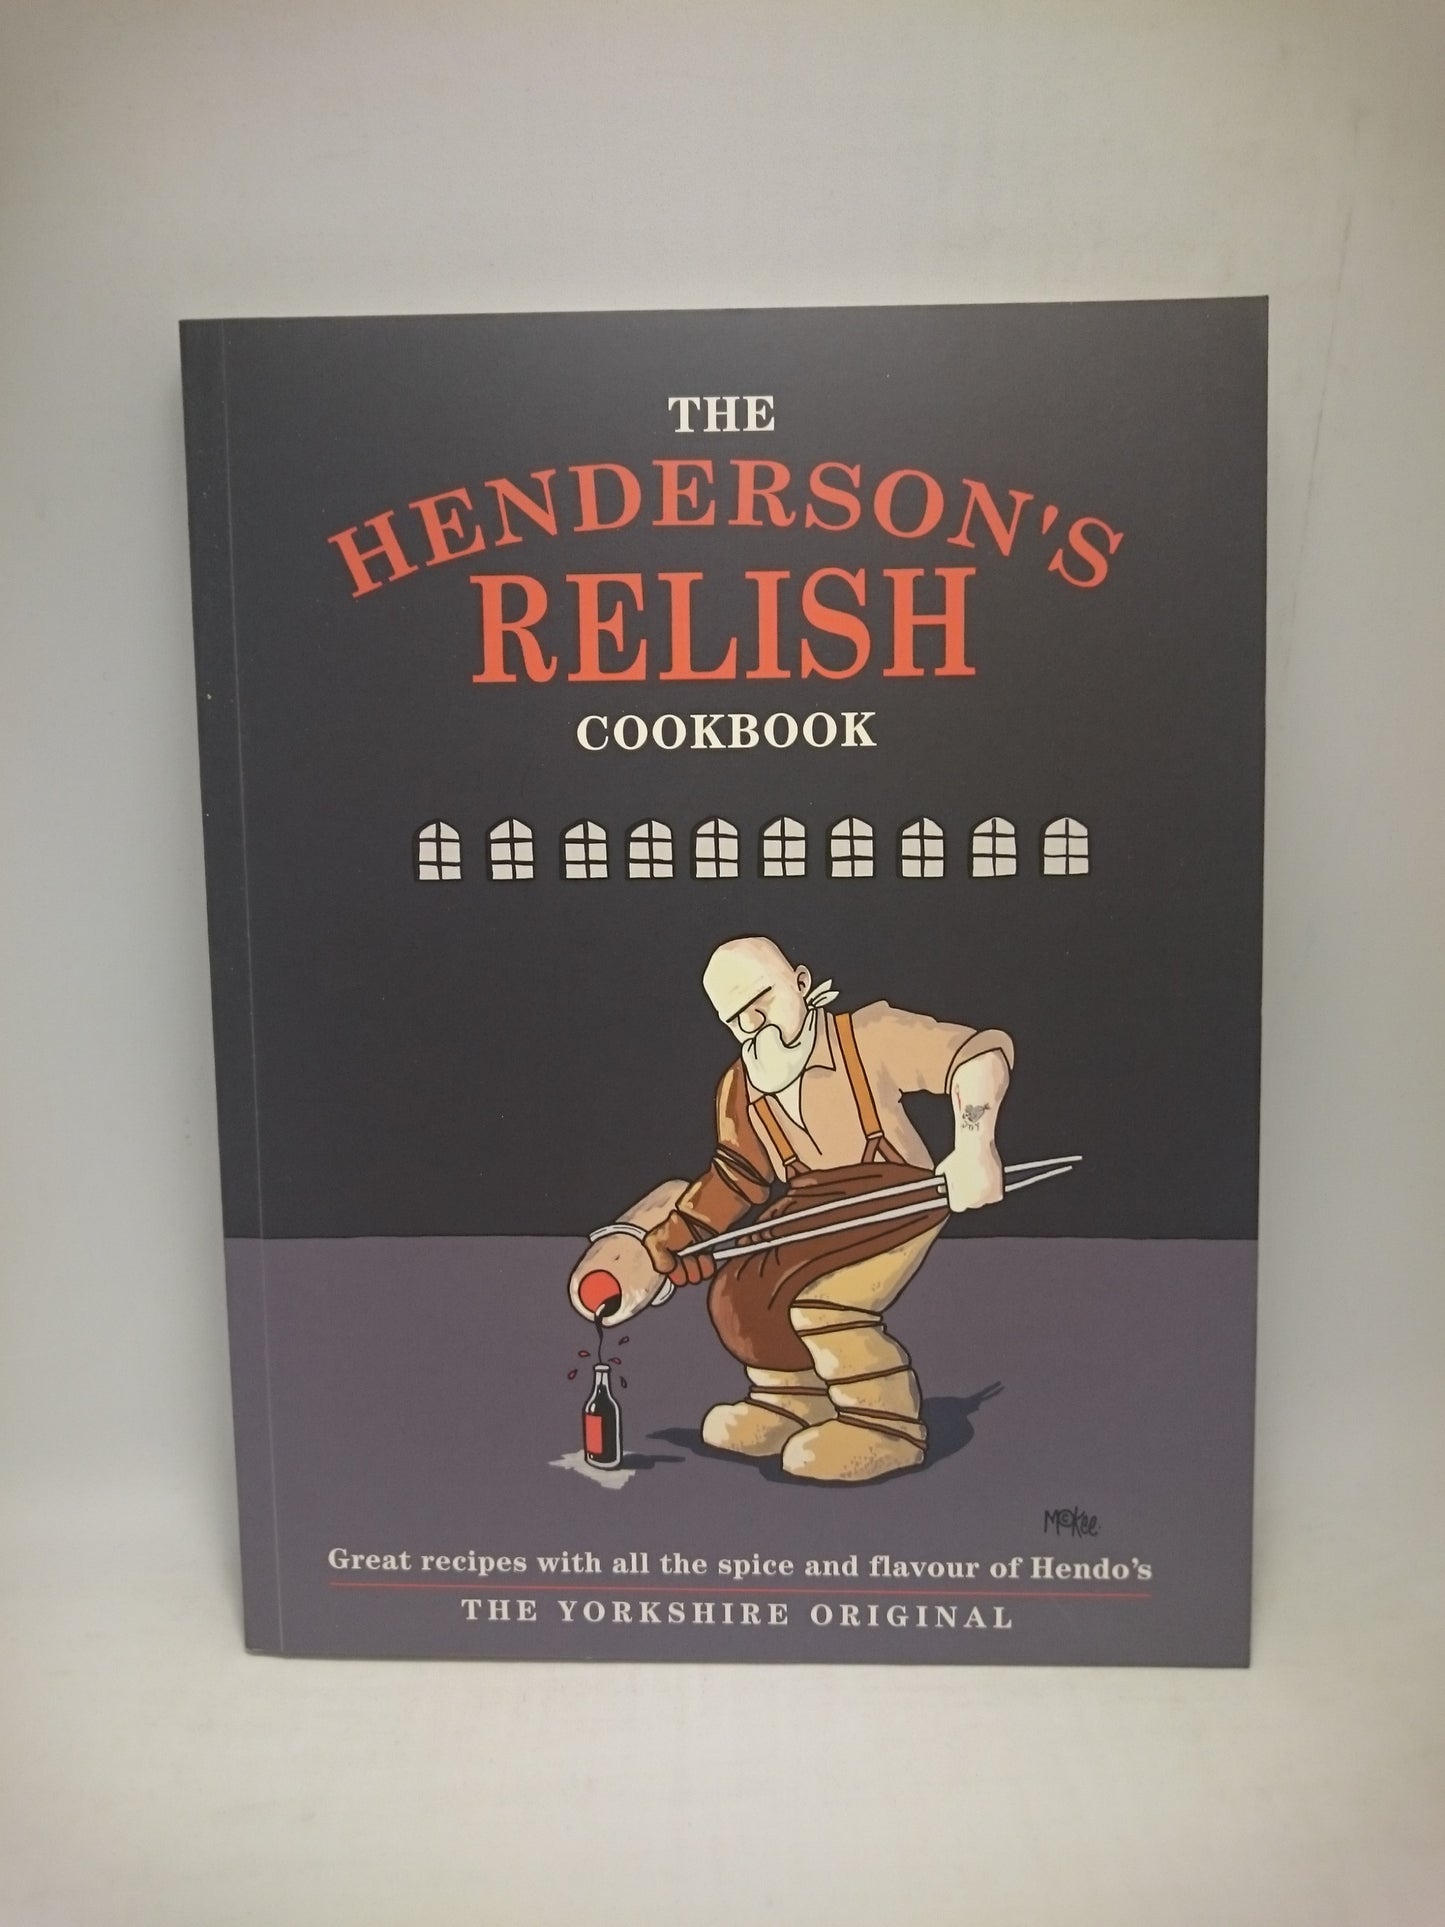 The Henderson's Relish Cookbook